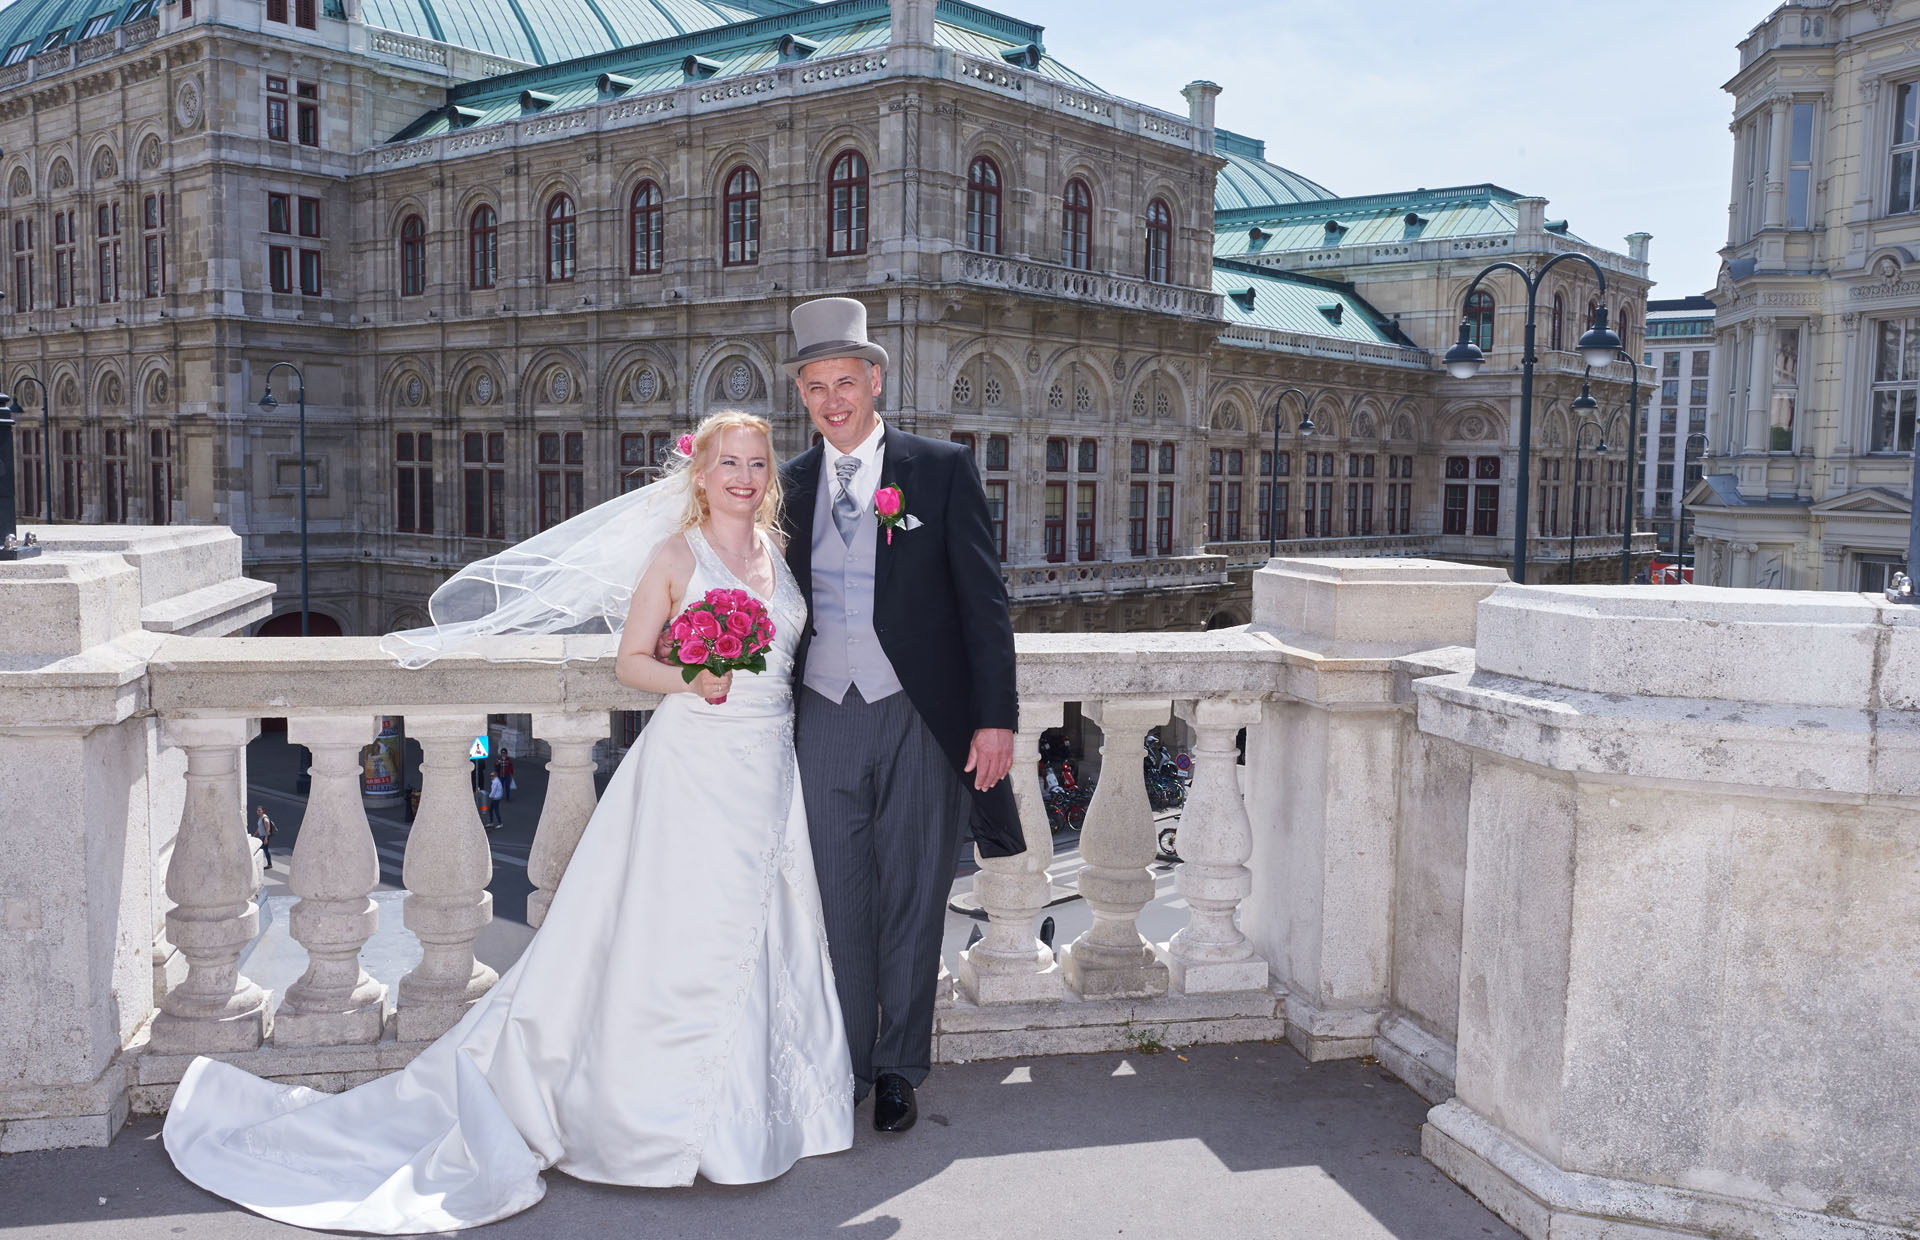 Hochzeitsfotograf Wien | Harald C. Sahling 0.28100200 1679520770